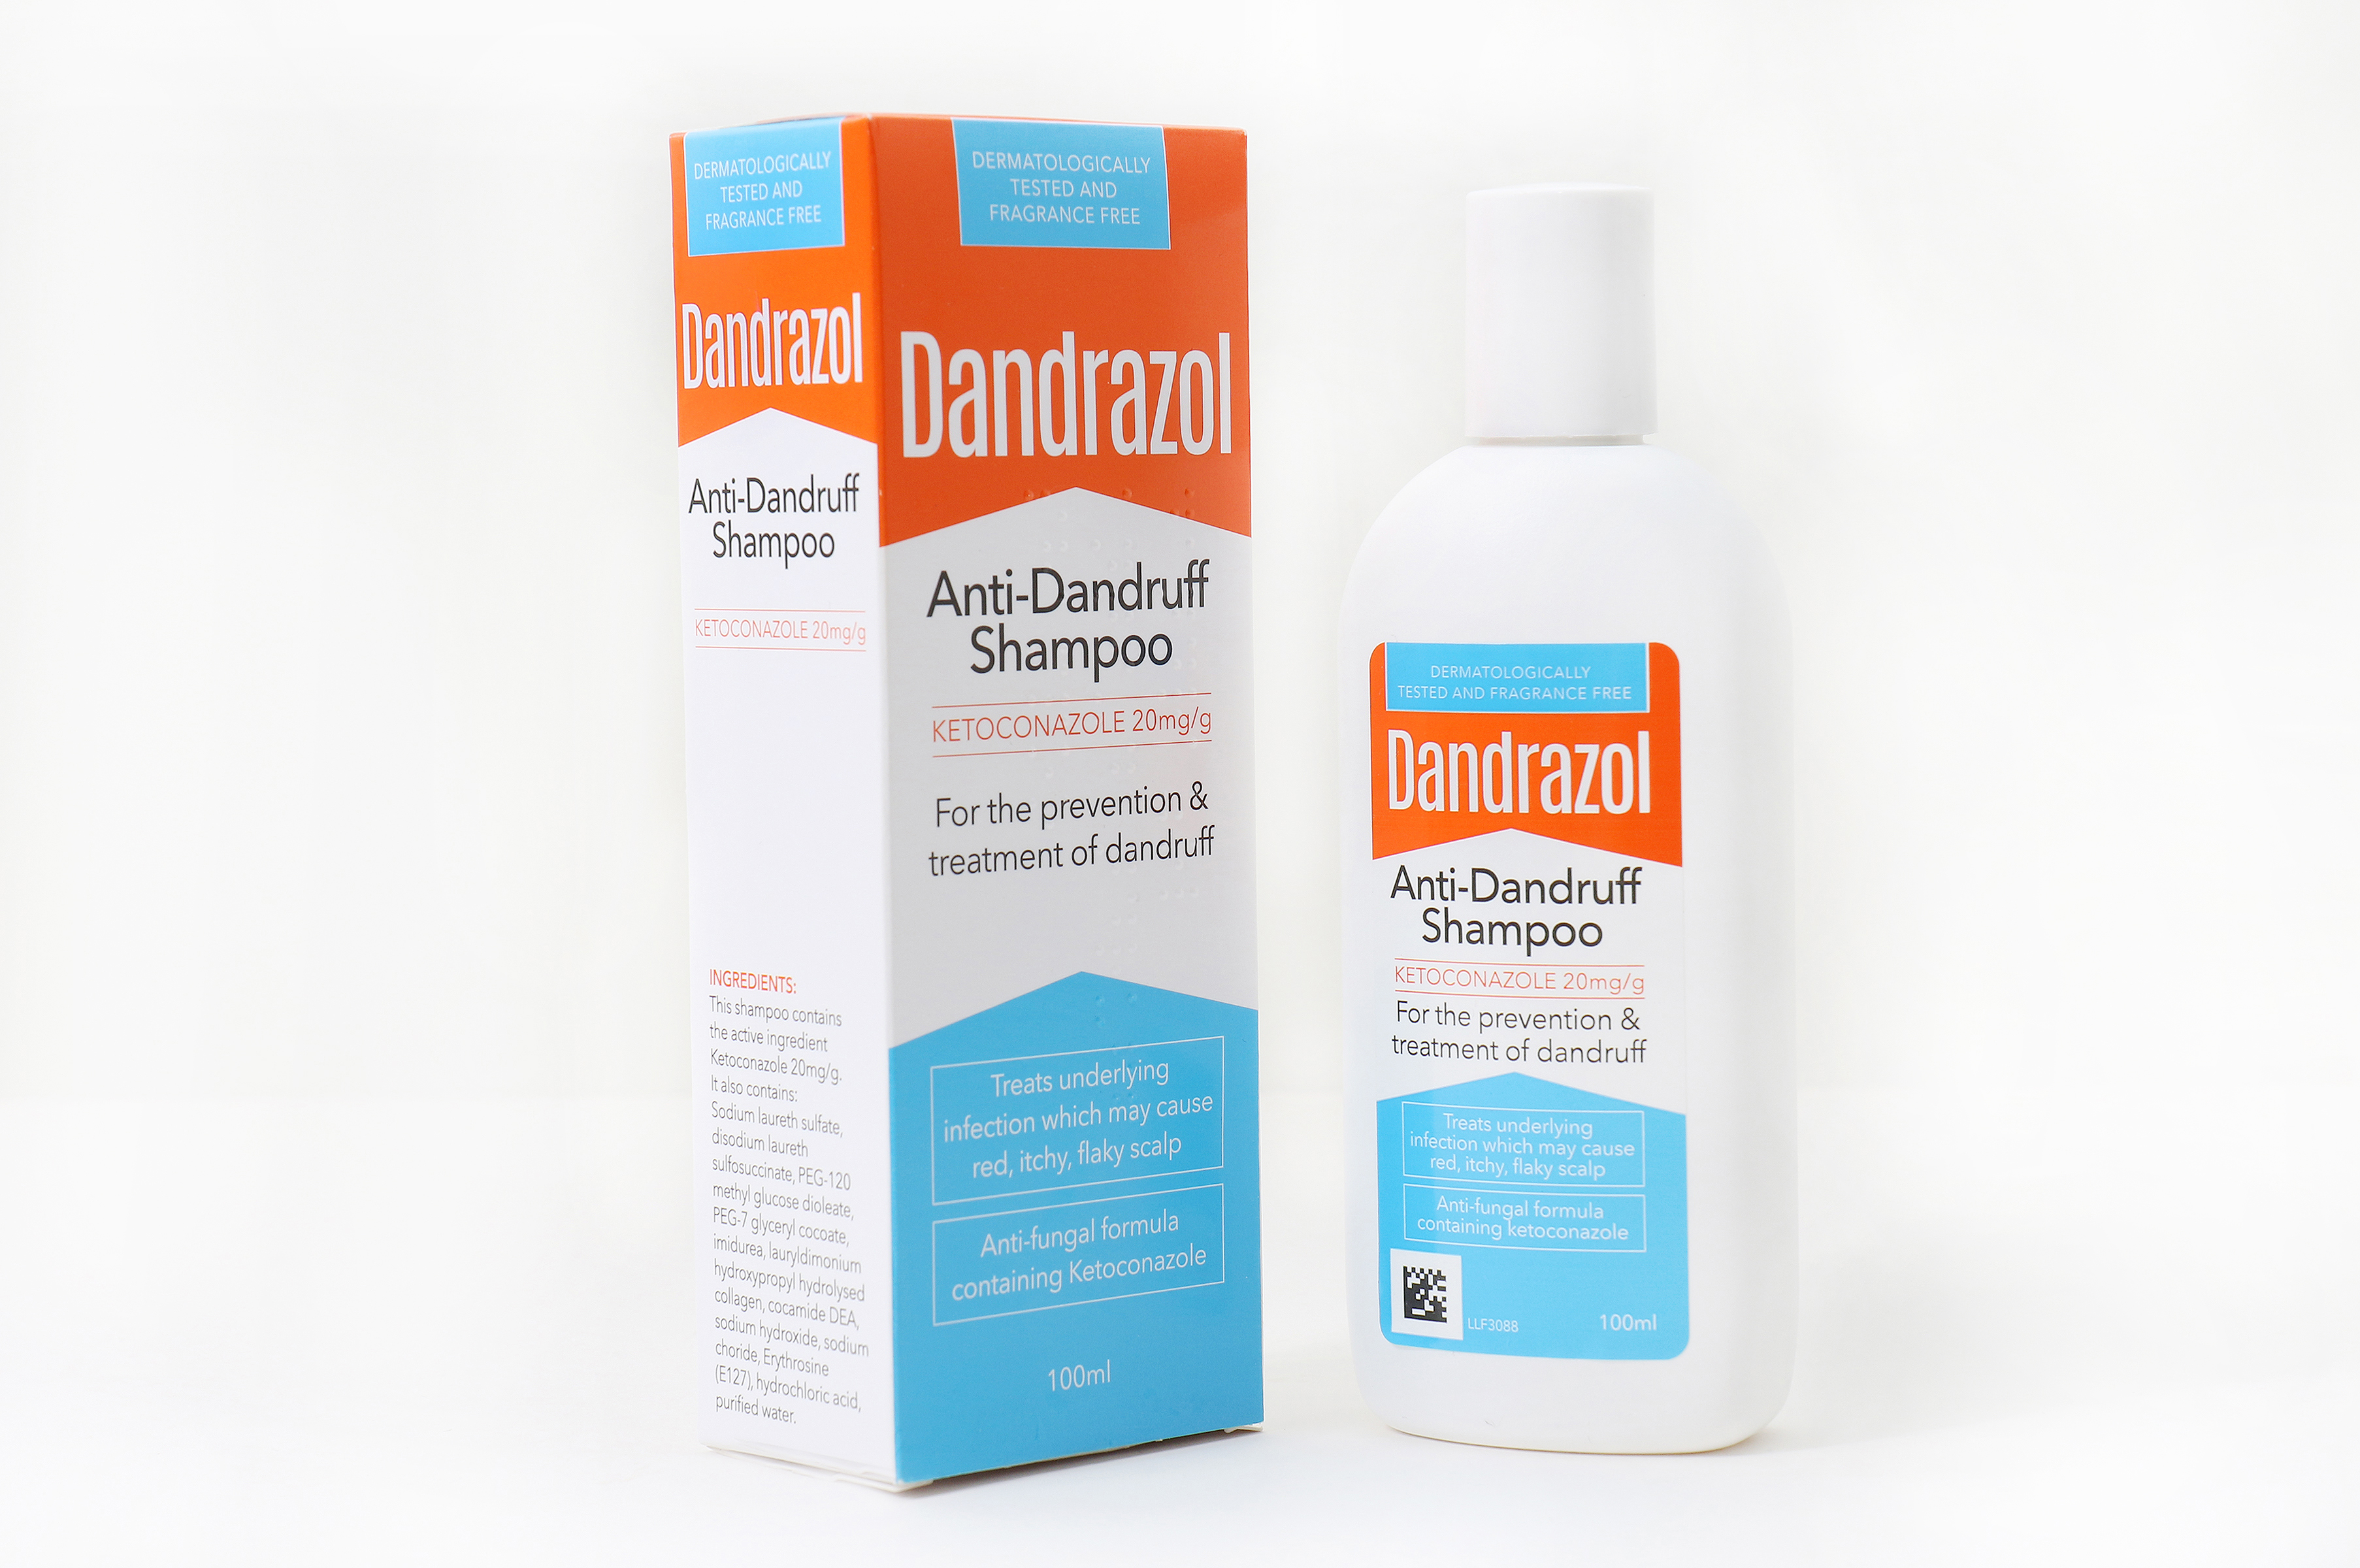 Dandrazol Anti-dandruff Shampoo